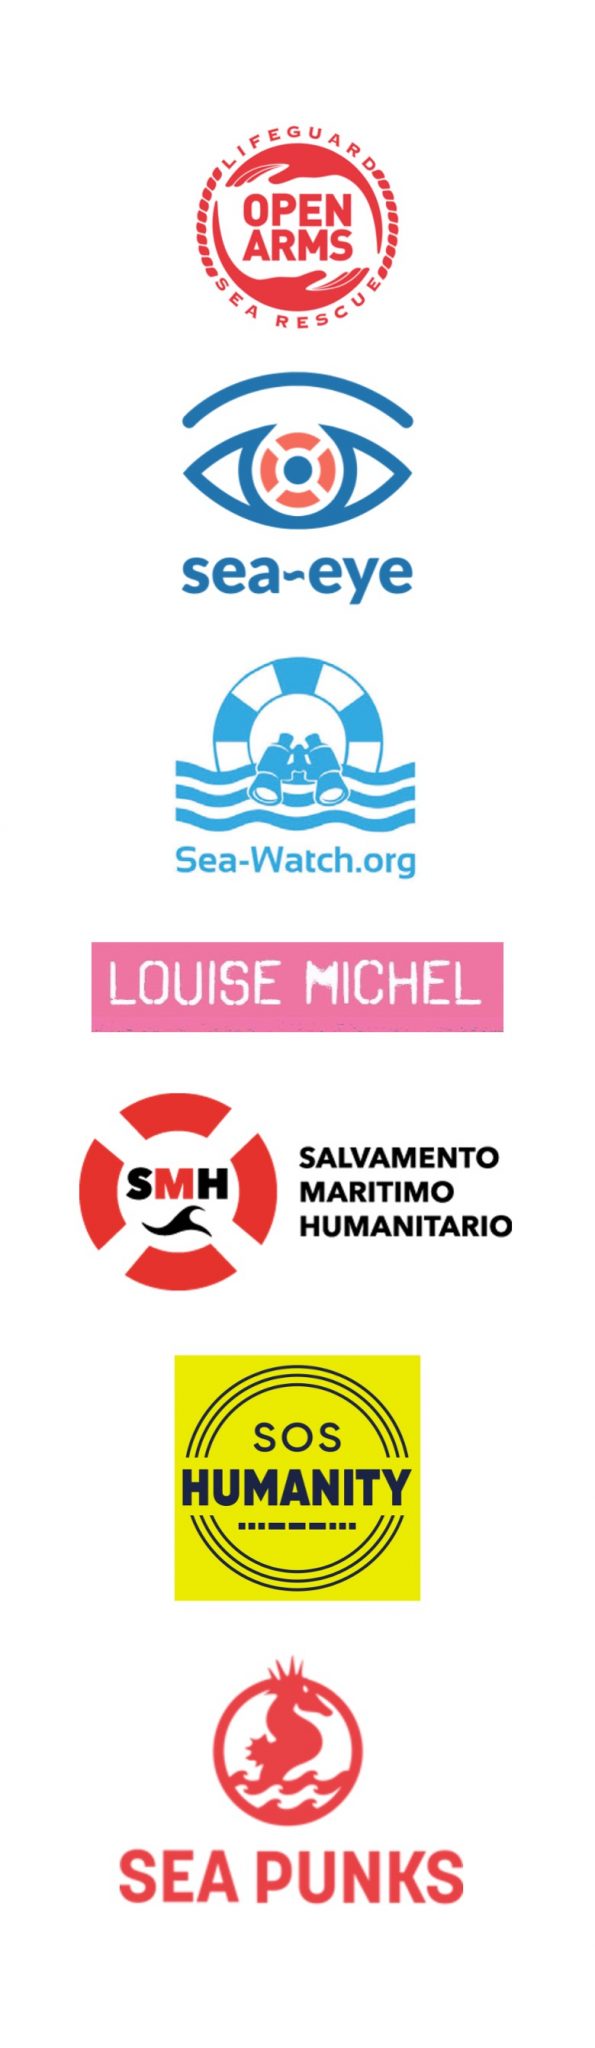 logos ONG rescat humanitari